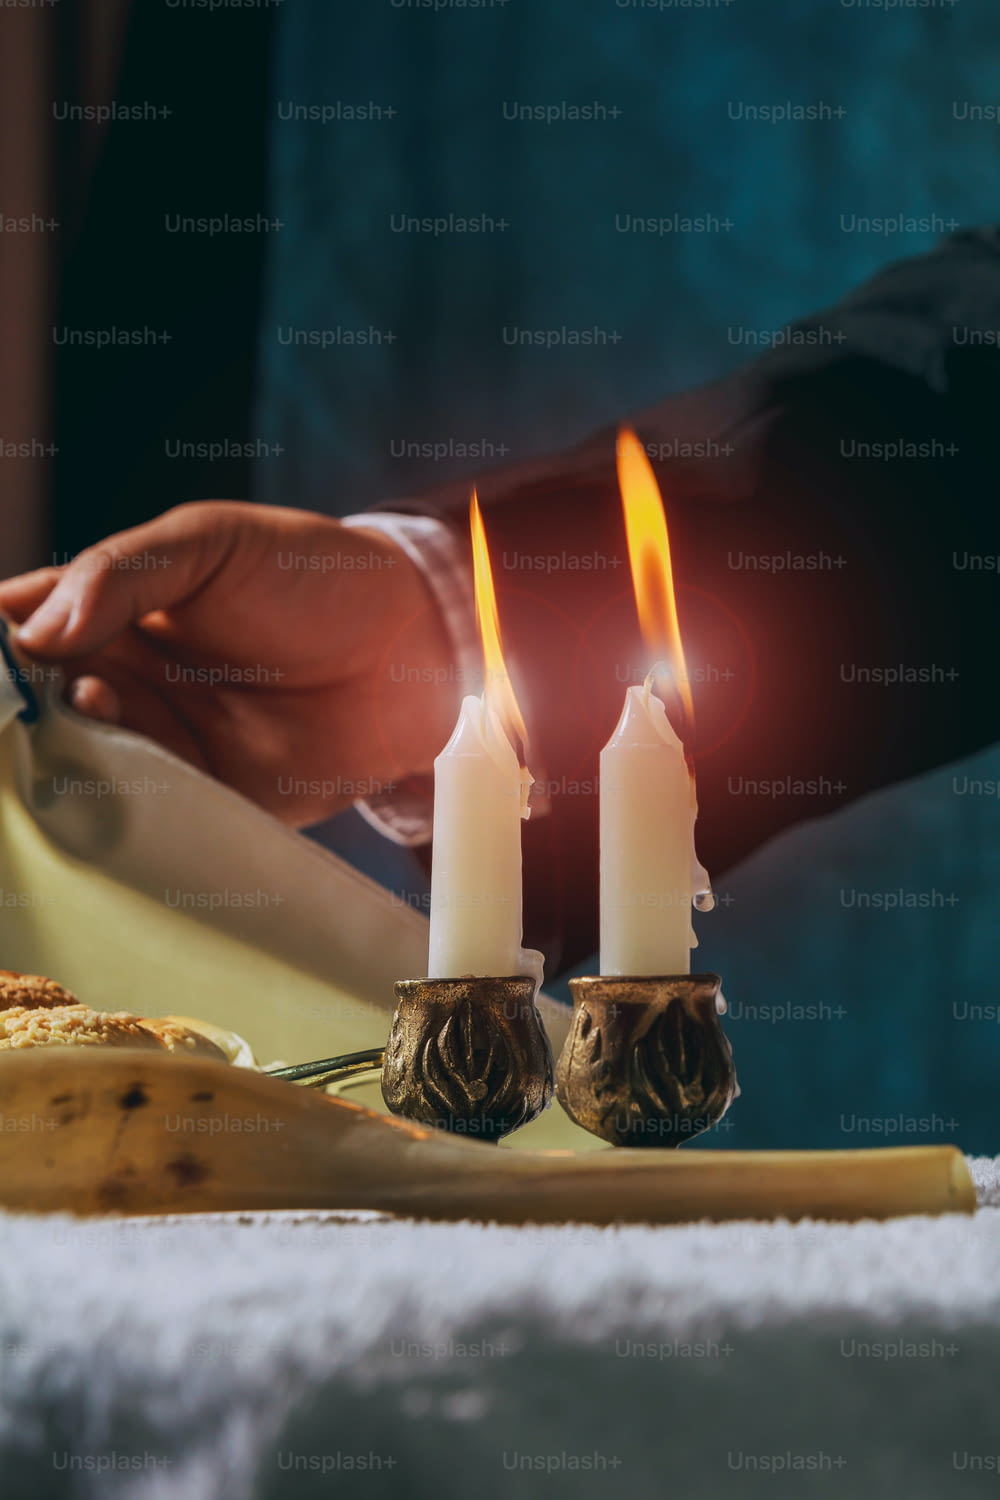 Sábado: Sábado, Ceremonia de Havdala al final del Sábado Judío